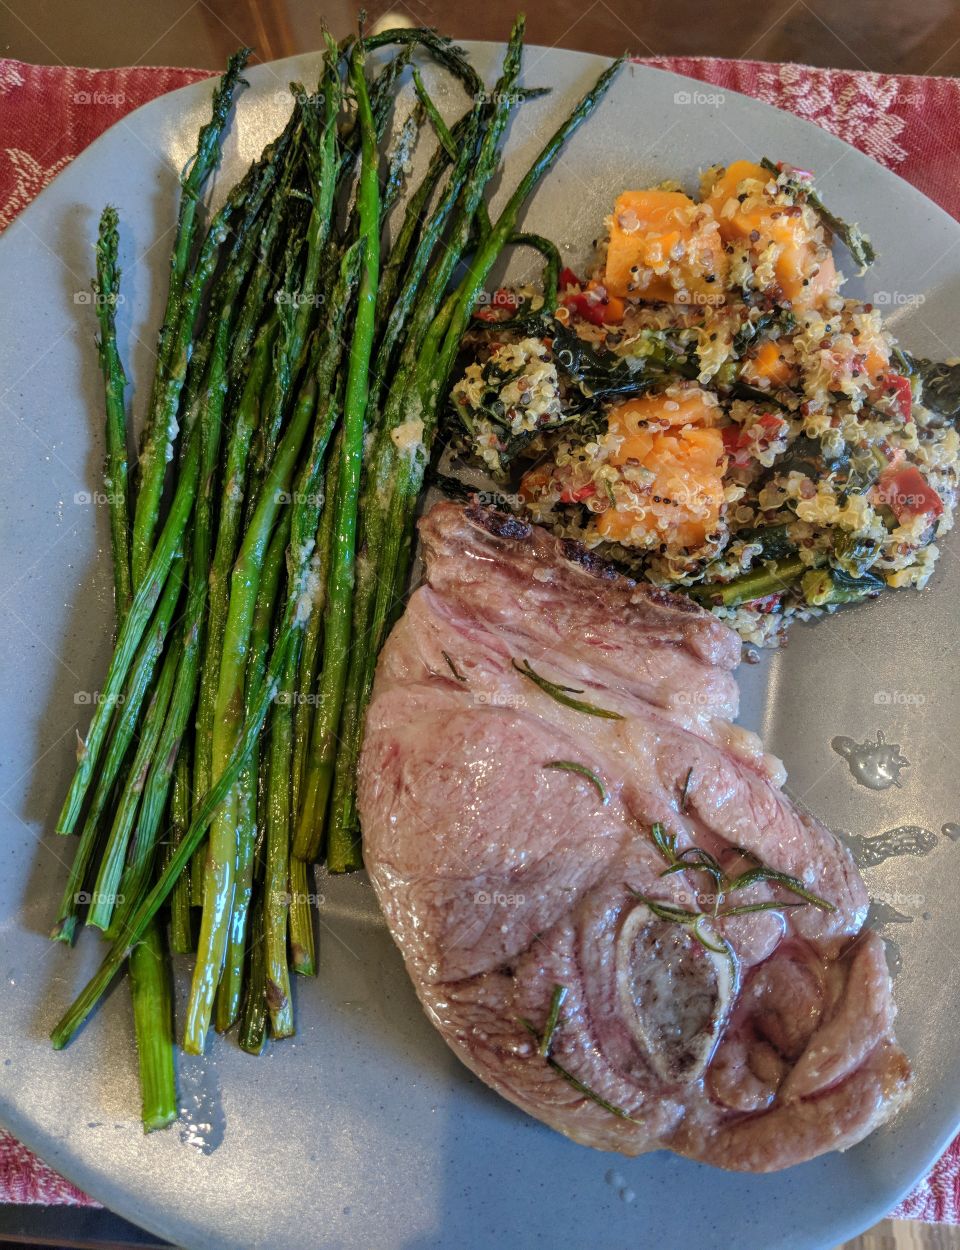 lamb, asparagus and potatoes